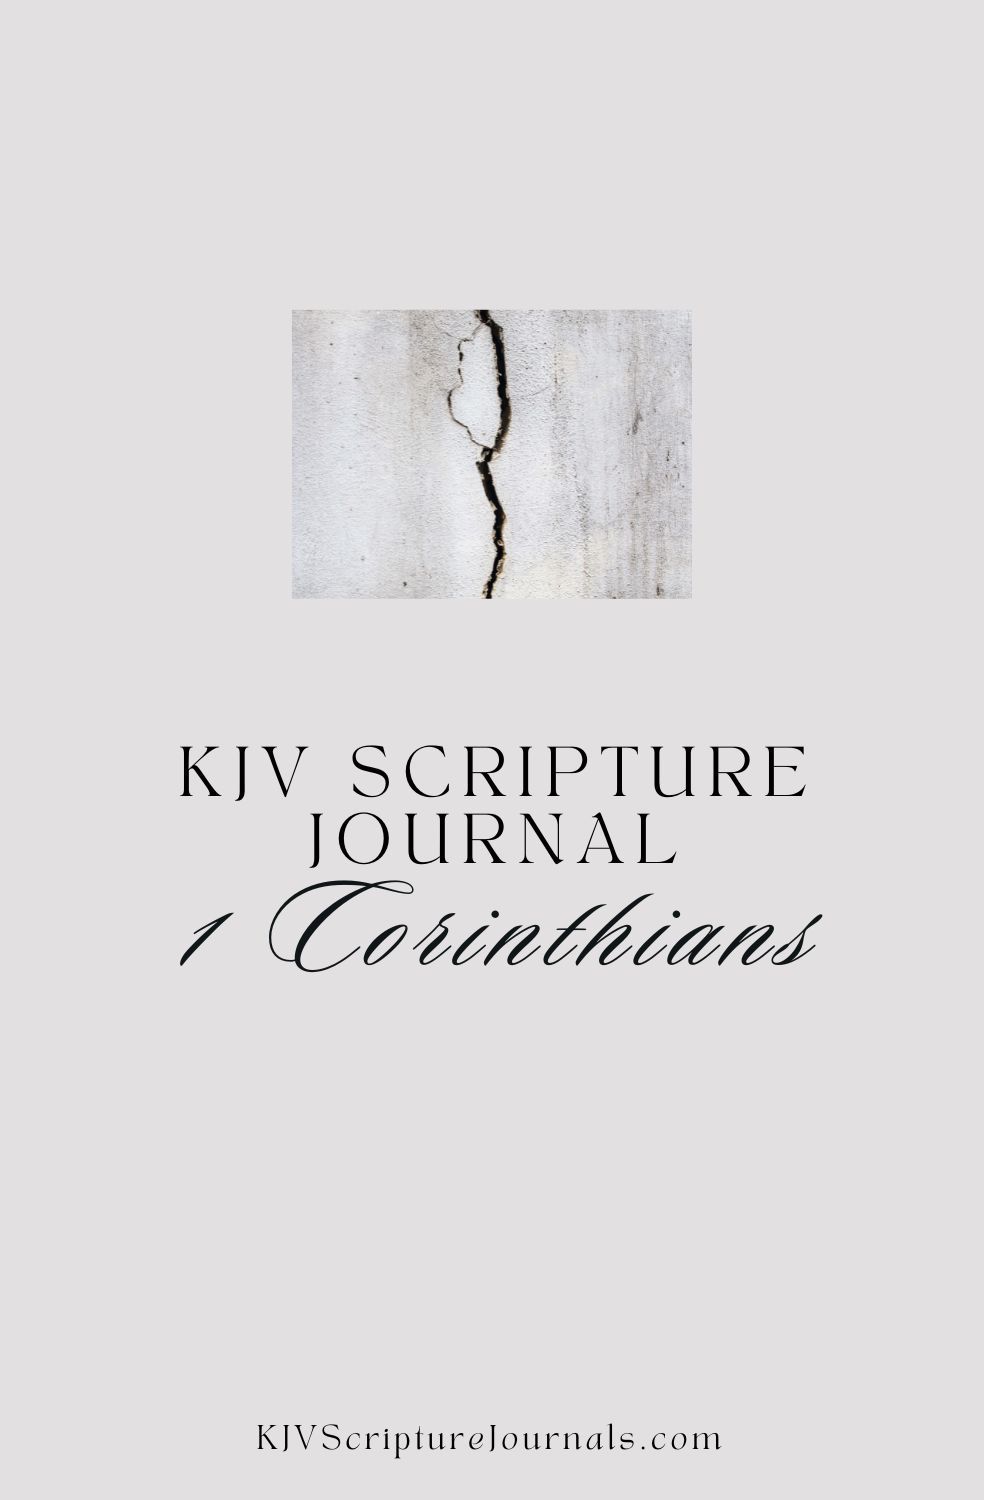 KJV Scripture Journal: 1 Corinthians